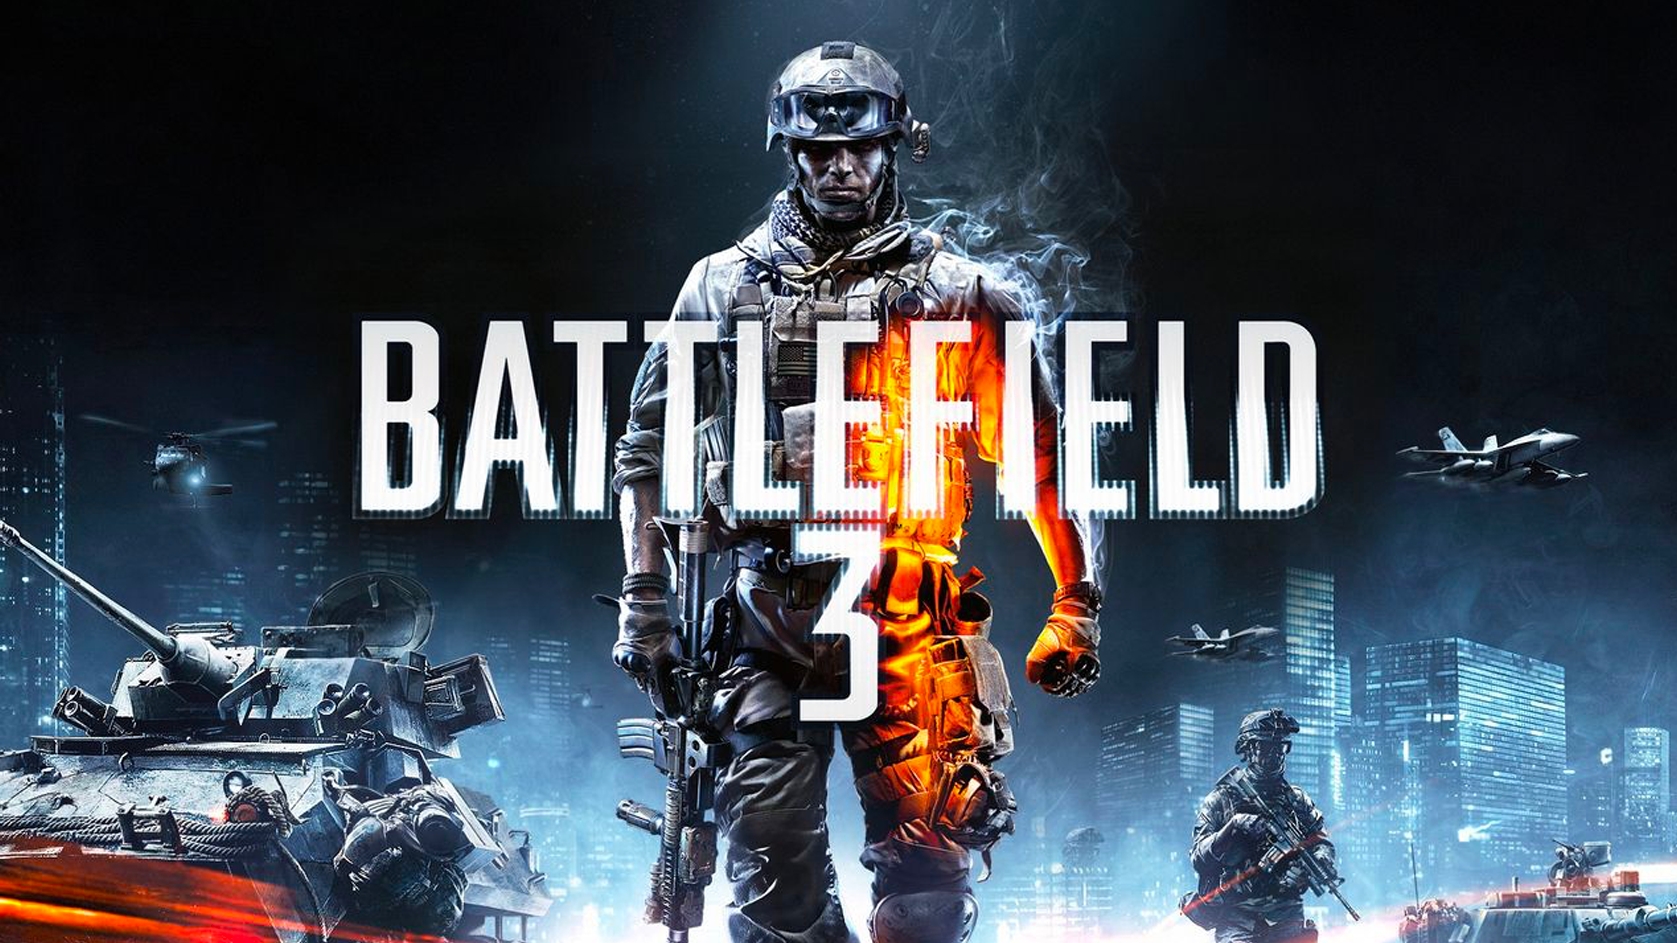 Battlefield 3 IOS/APK Download